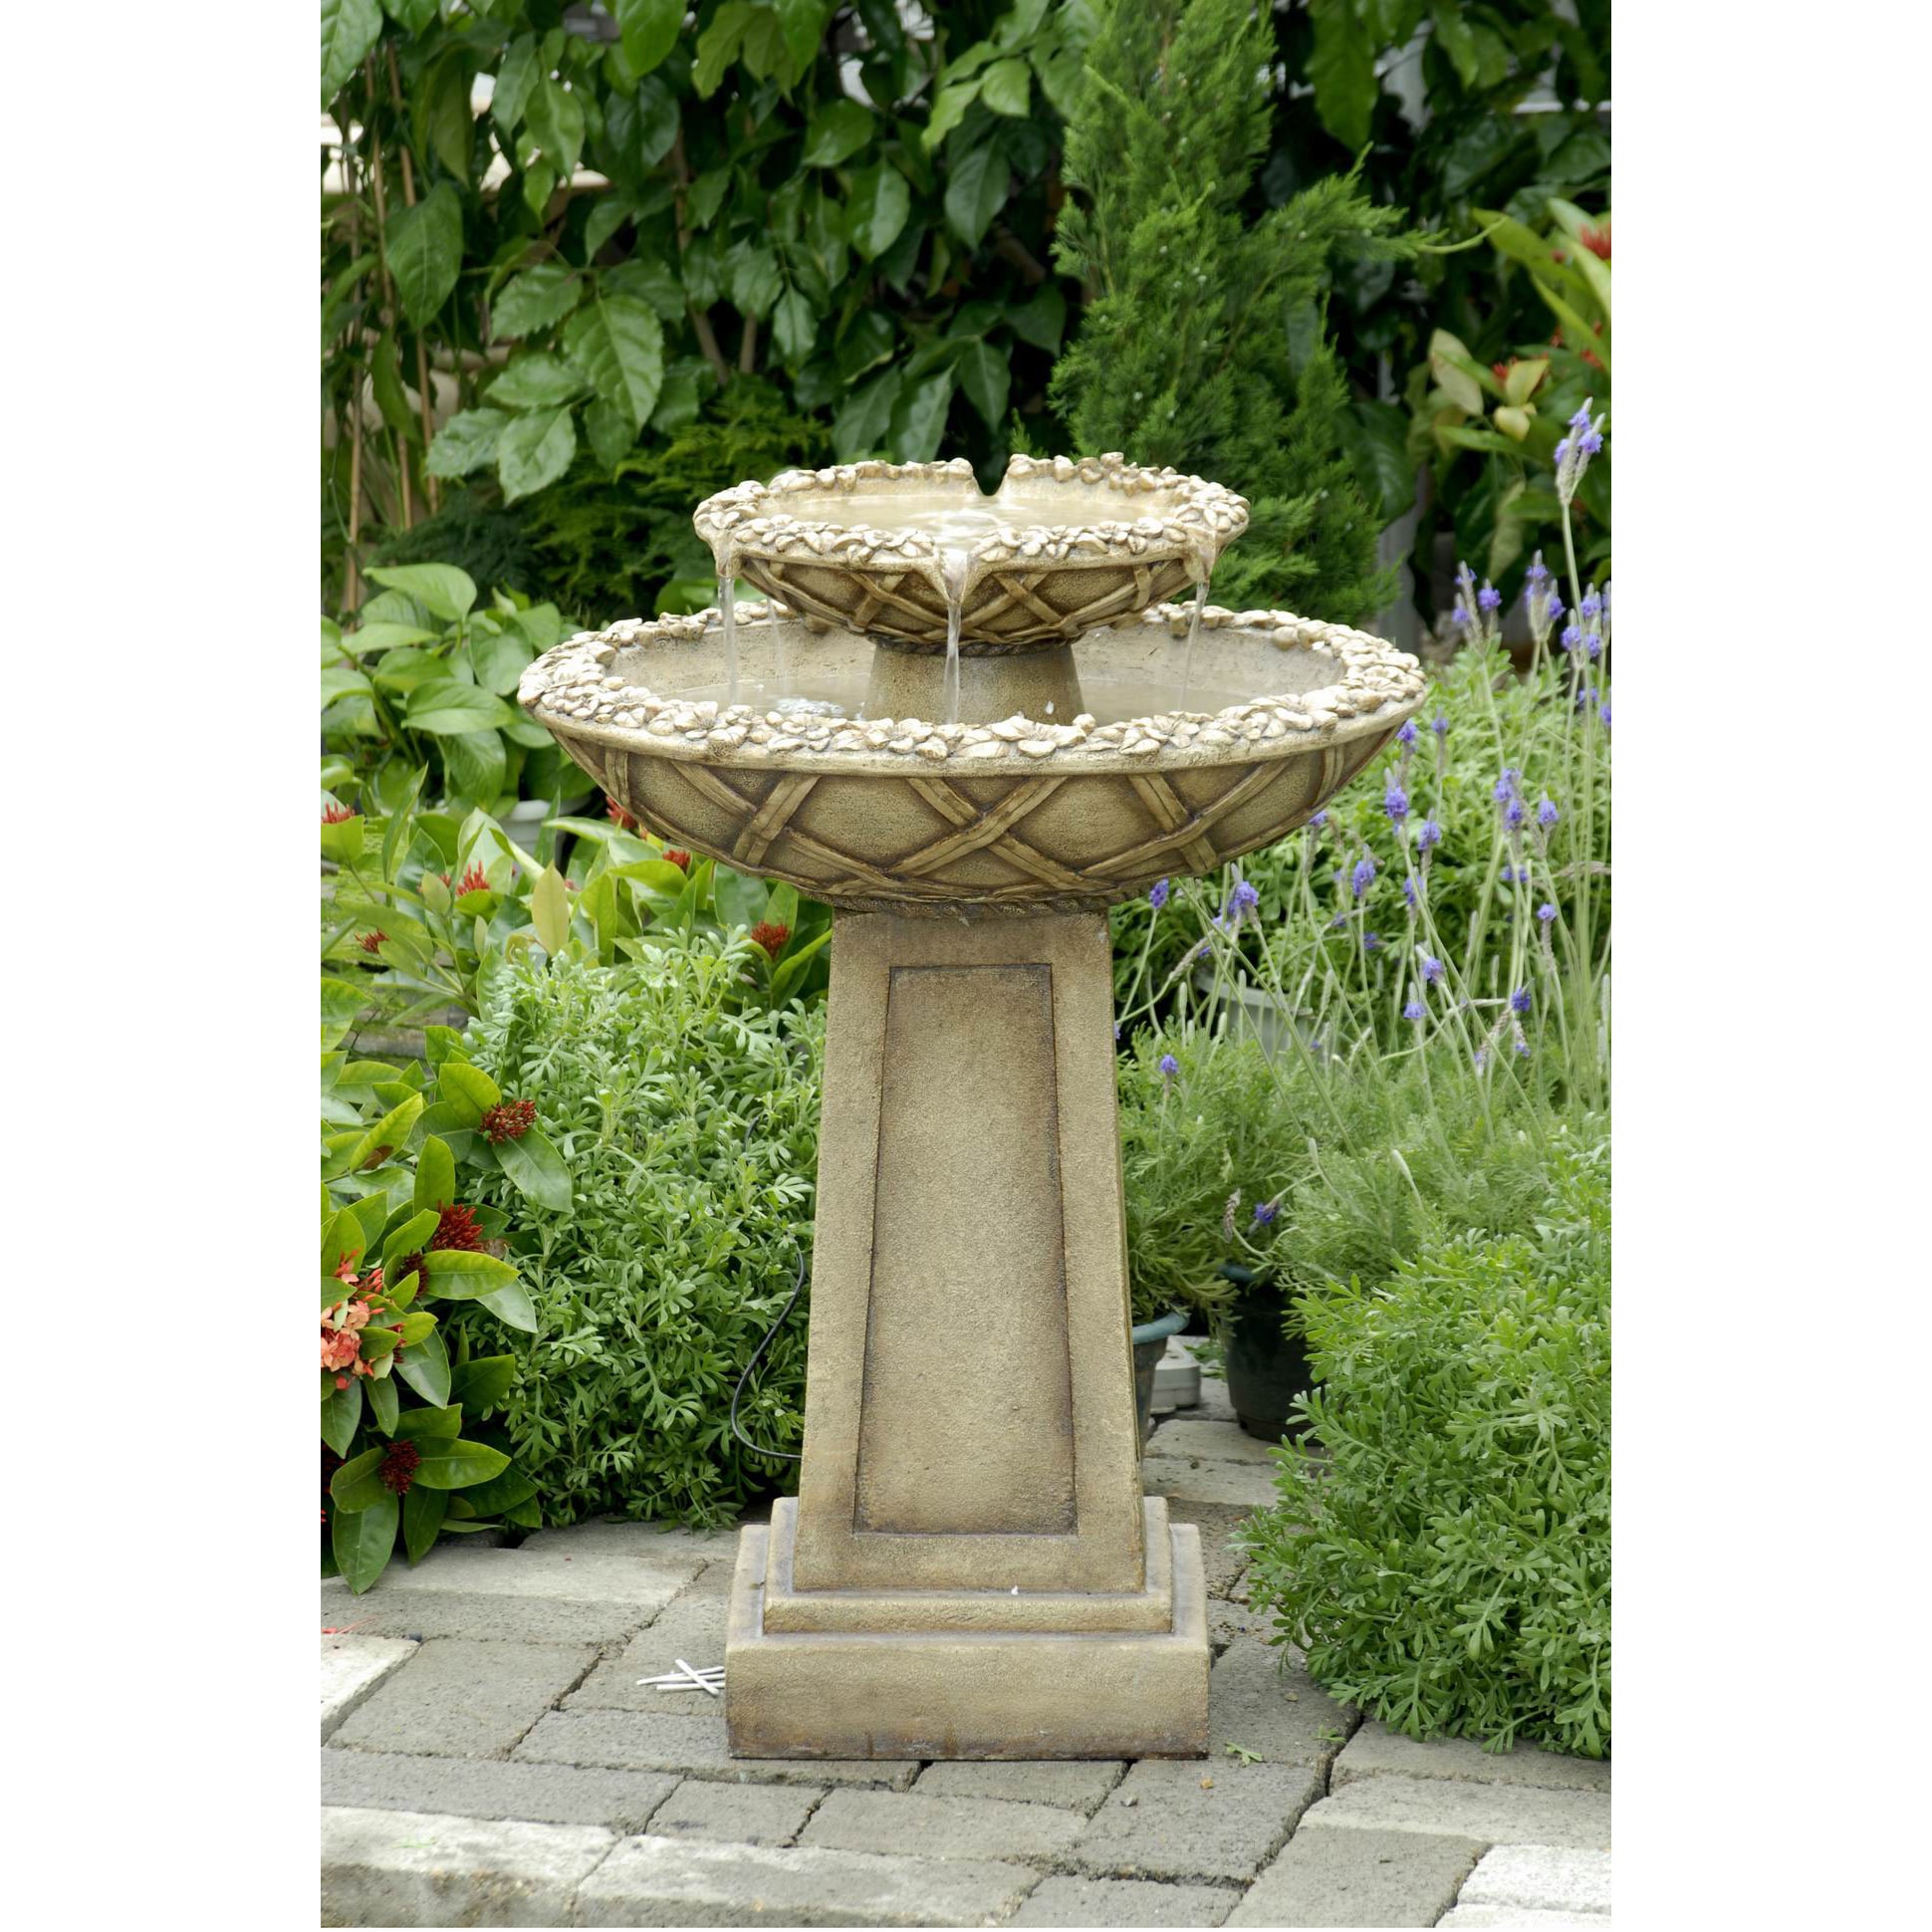 Details about   Outdoor Water Fountains/Bird Baths 